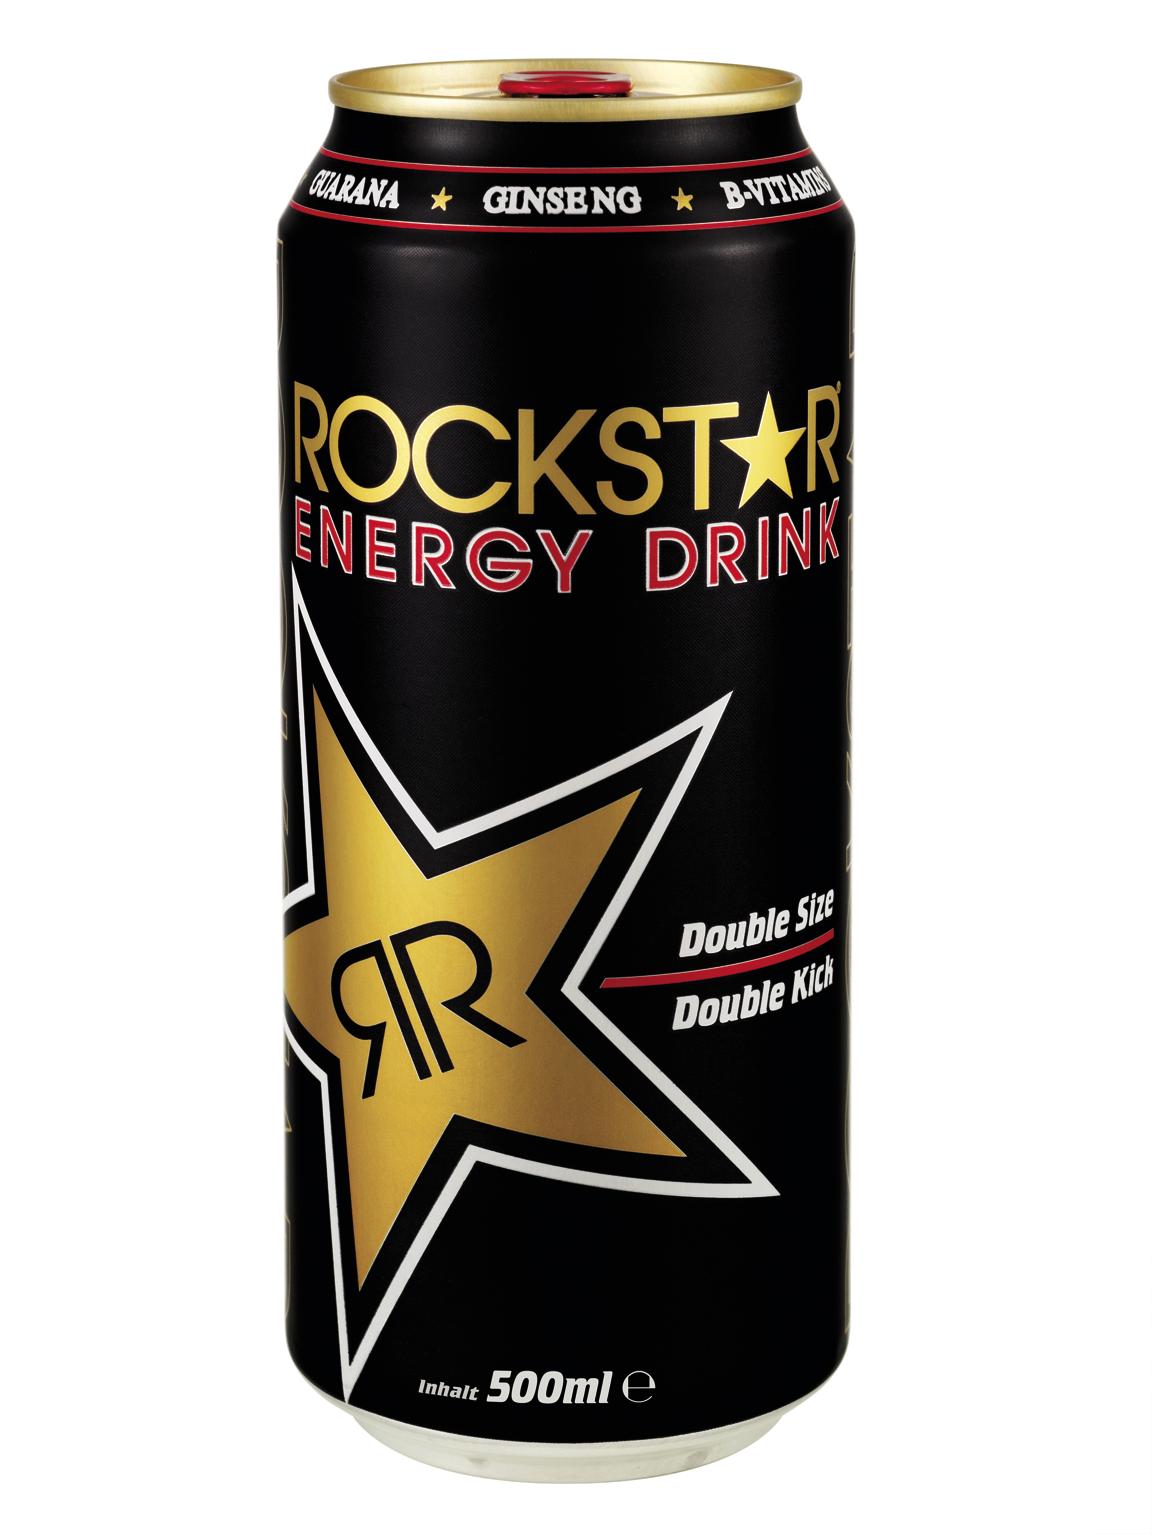 Rockstar Energy Hd Wallpapers, Desktop Wallpaper - Rockstar Energy Drink - HD Wallpaper 